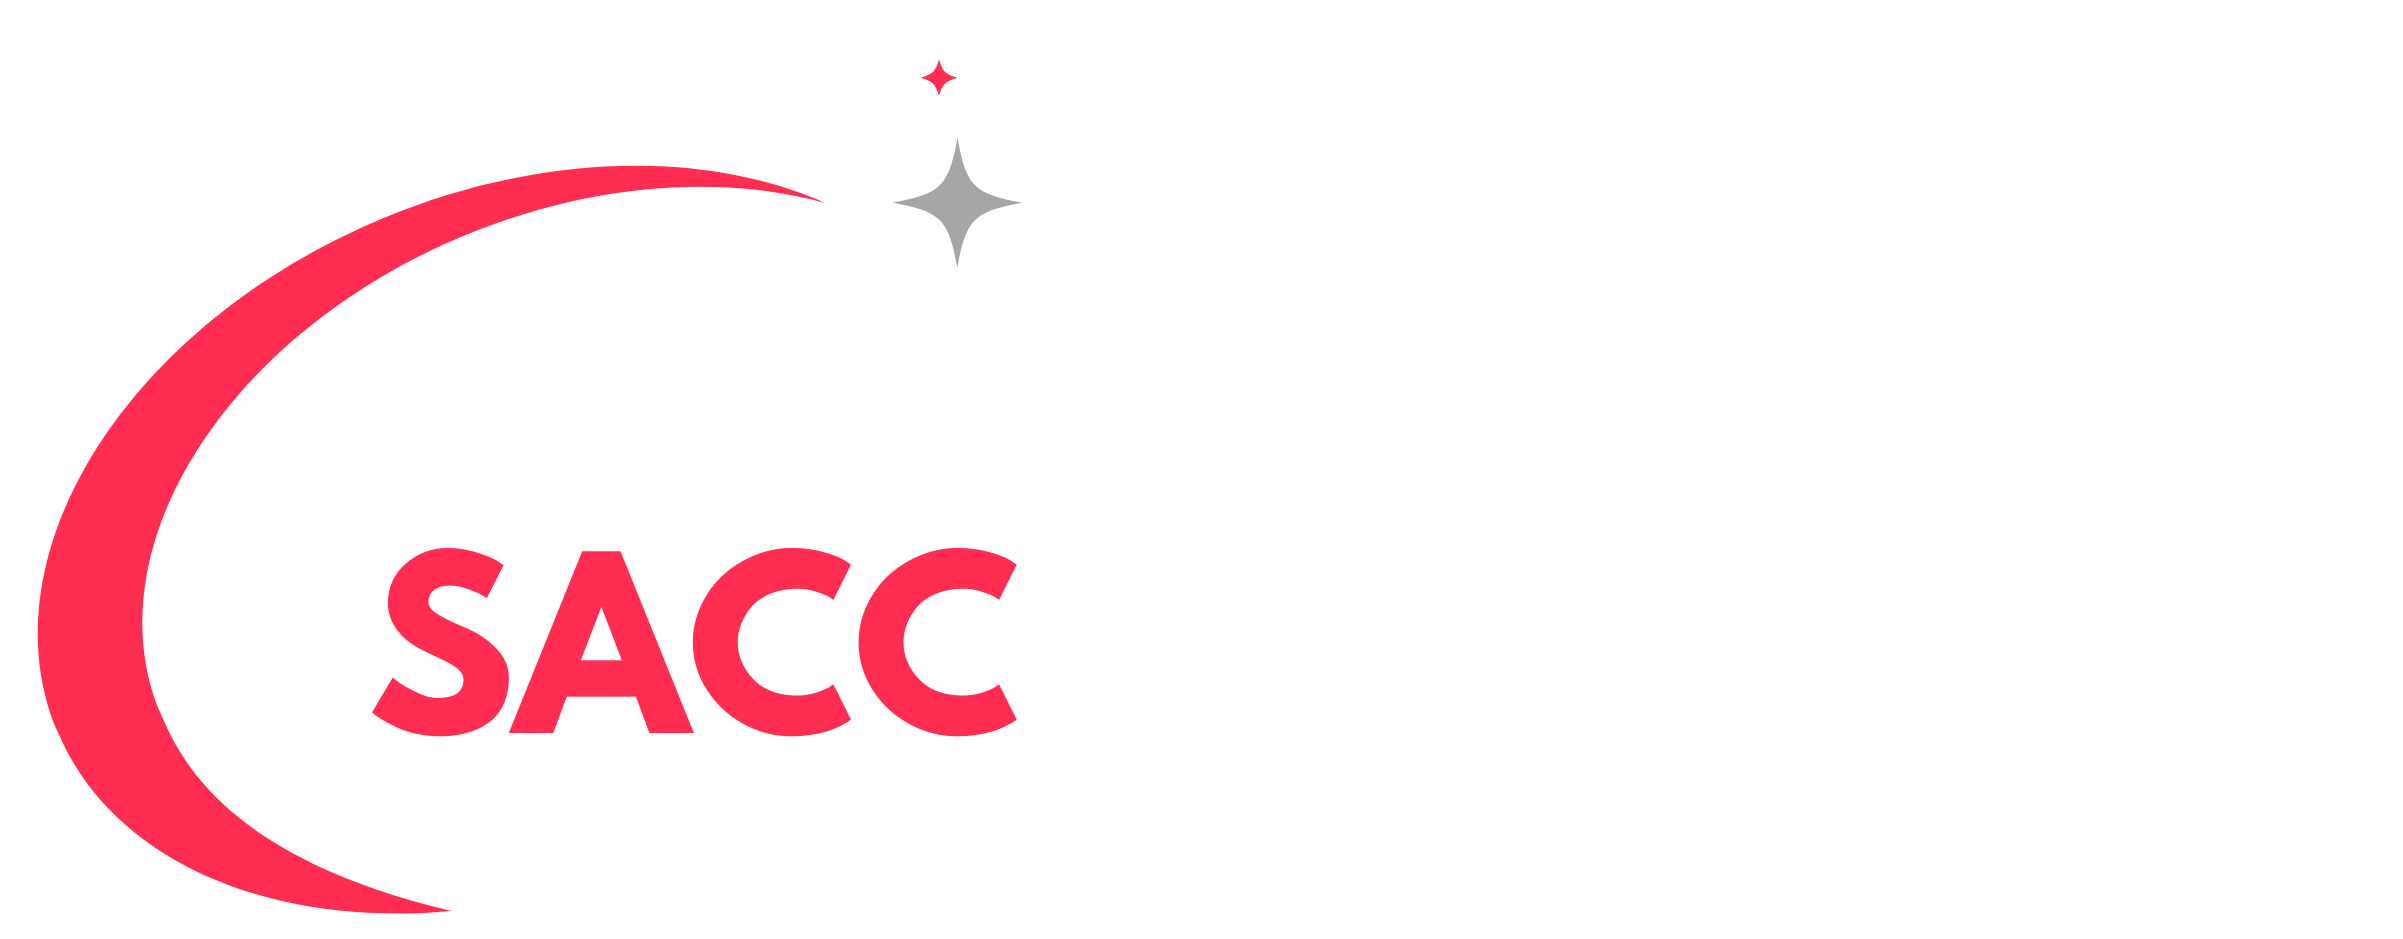 SACC Educator logo